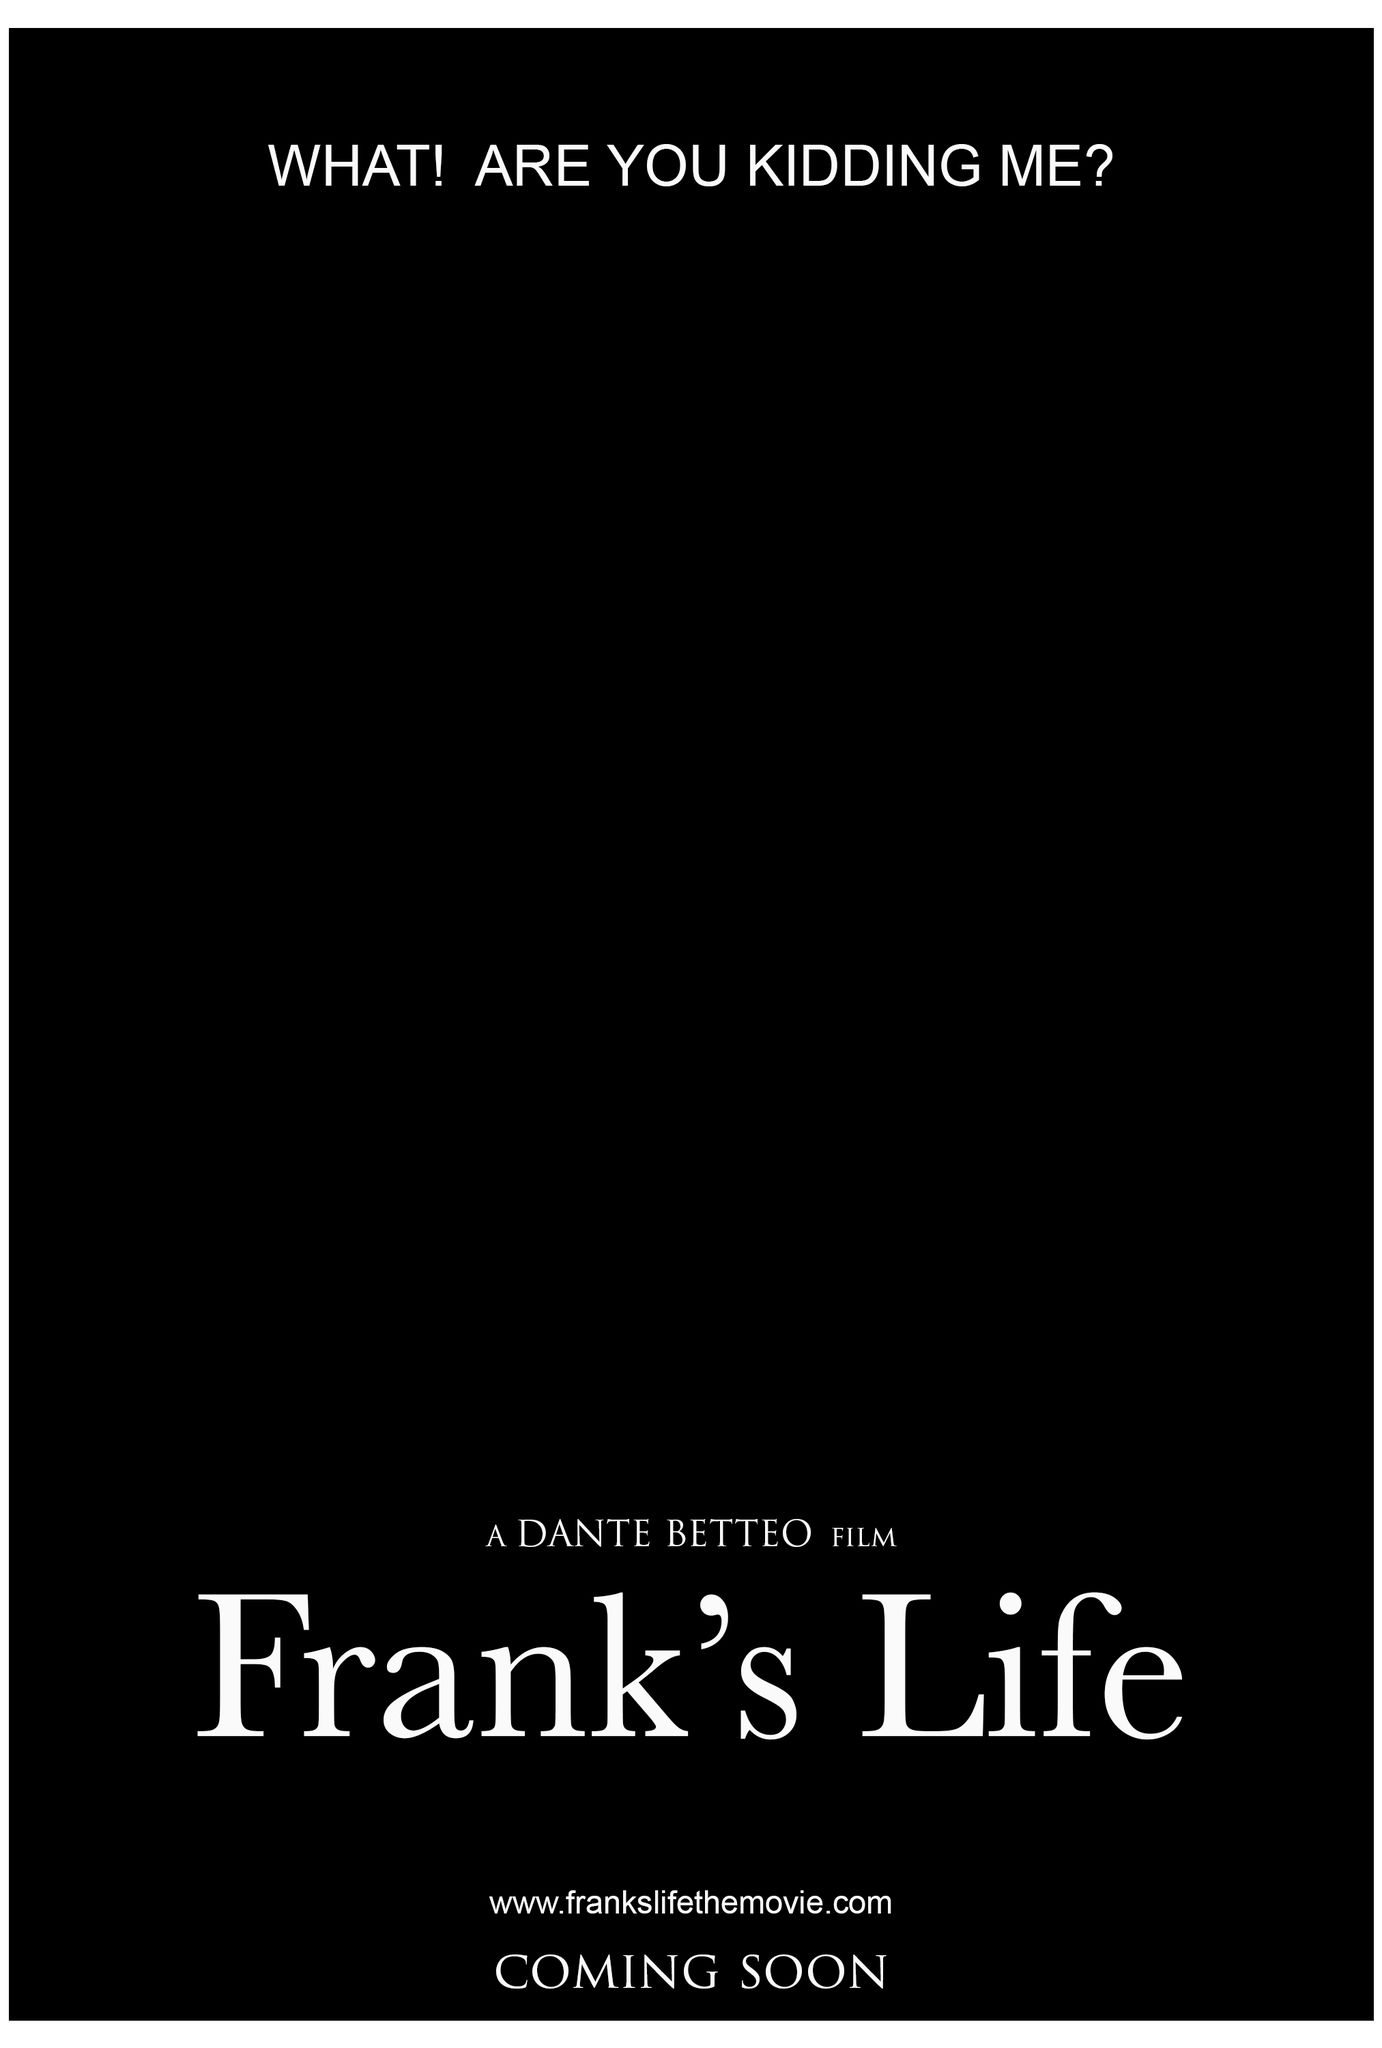 FRANK'S LIFE